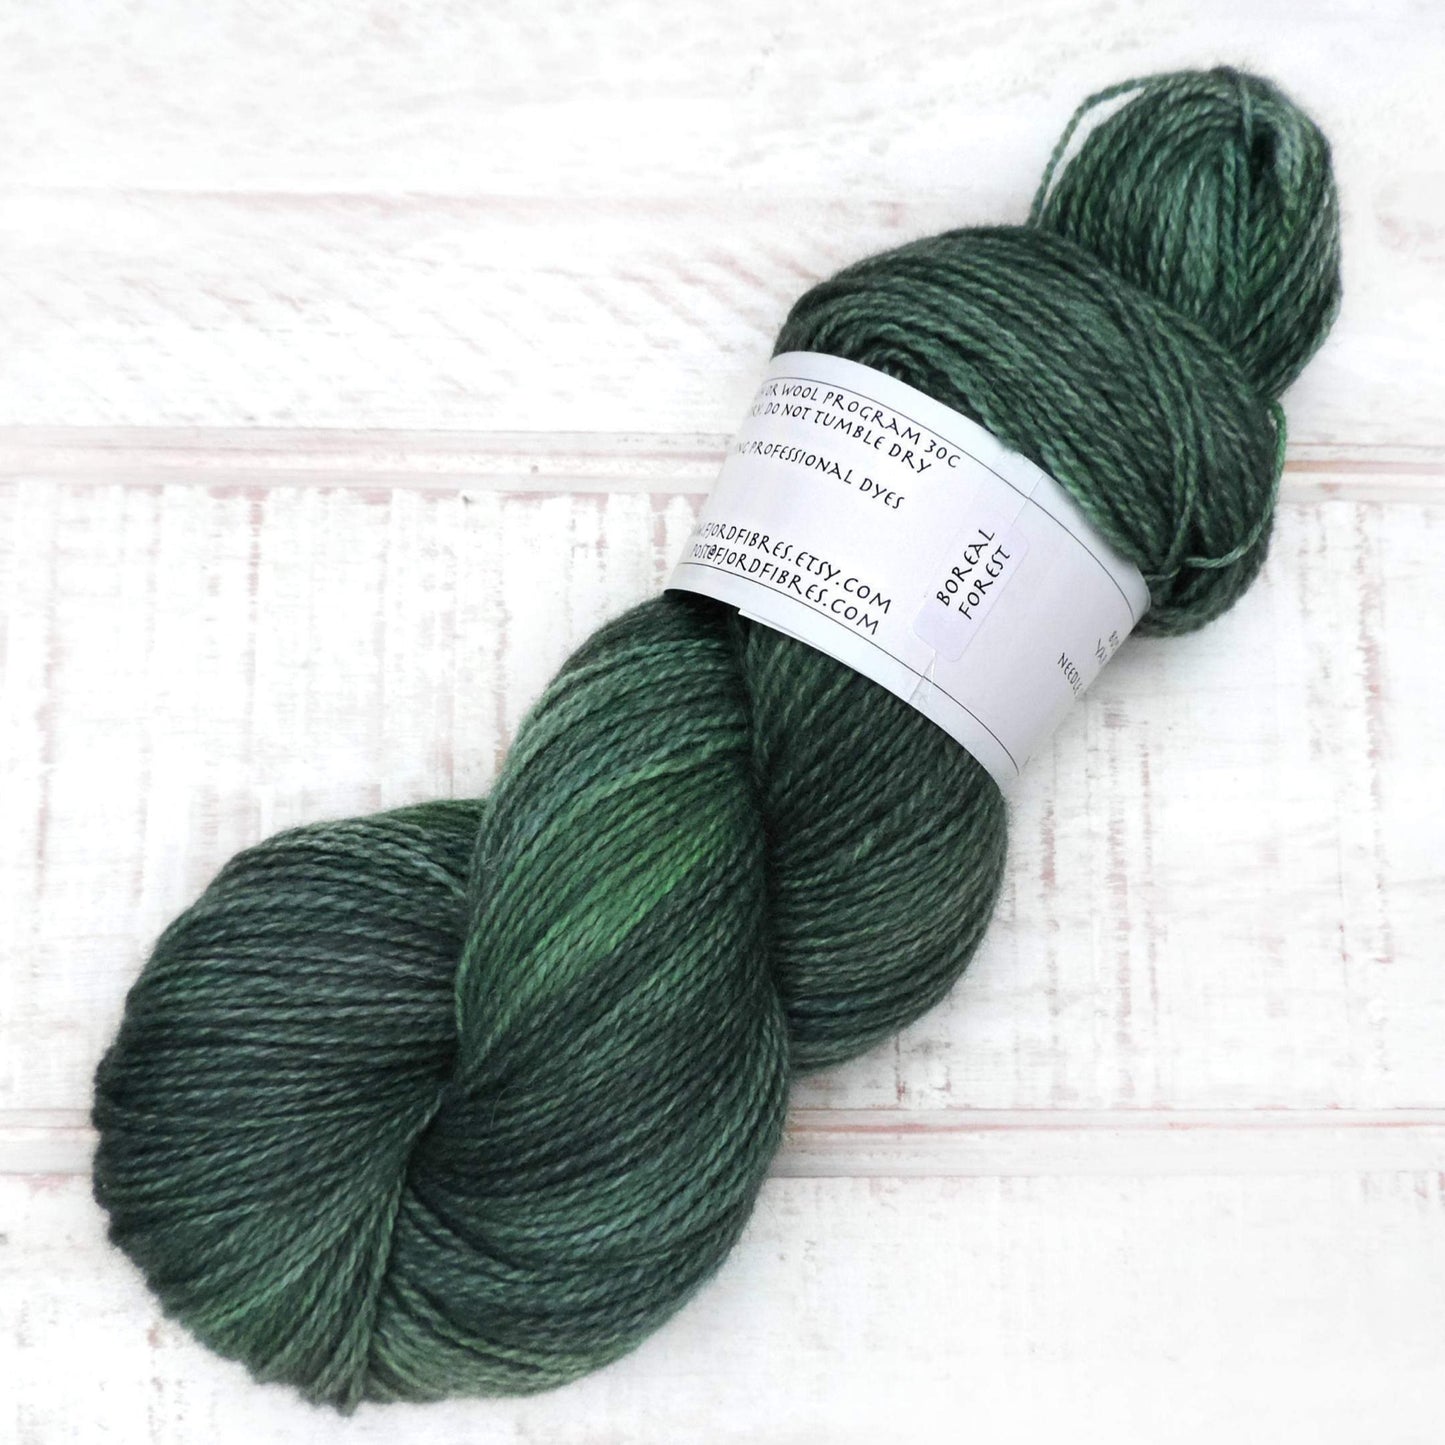 Boreal Forest - Trollfjord sock - Variegated Yarn - Hand dyed yarn